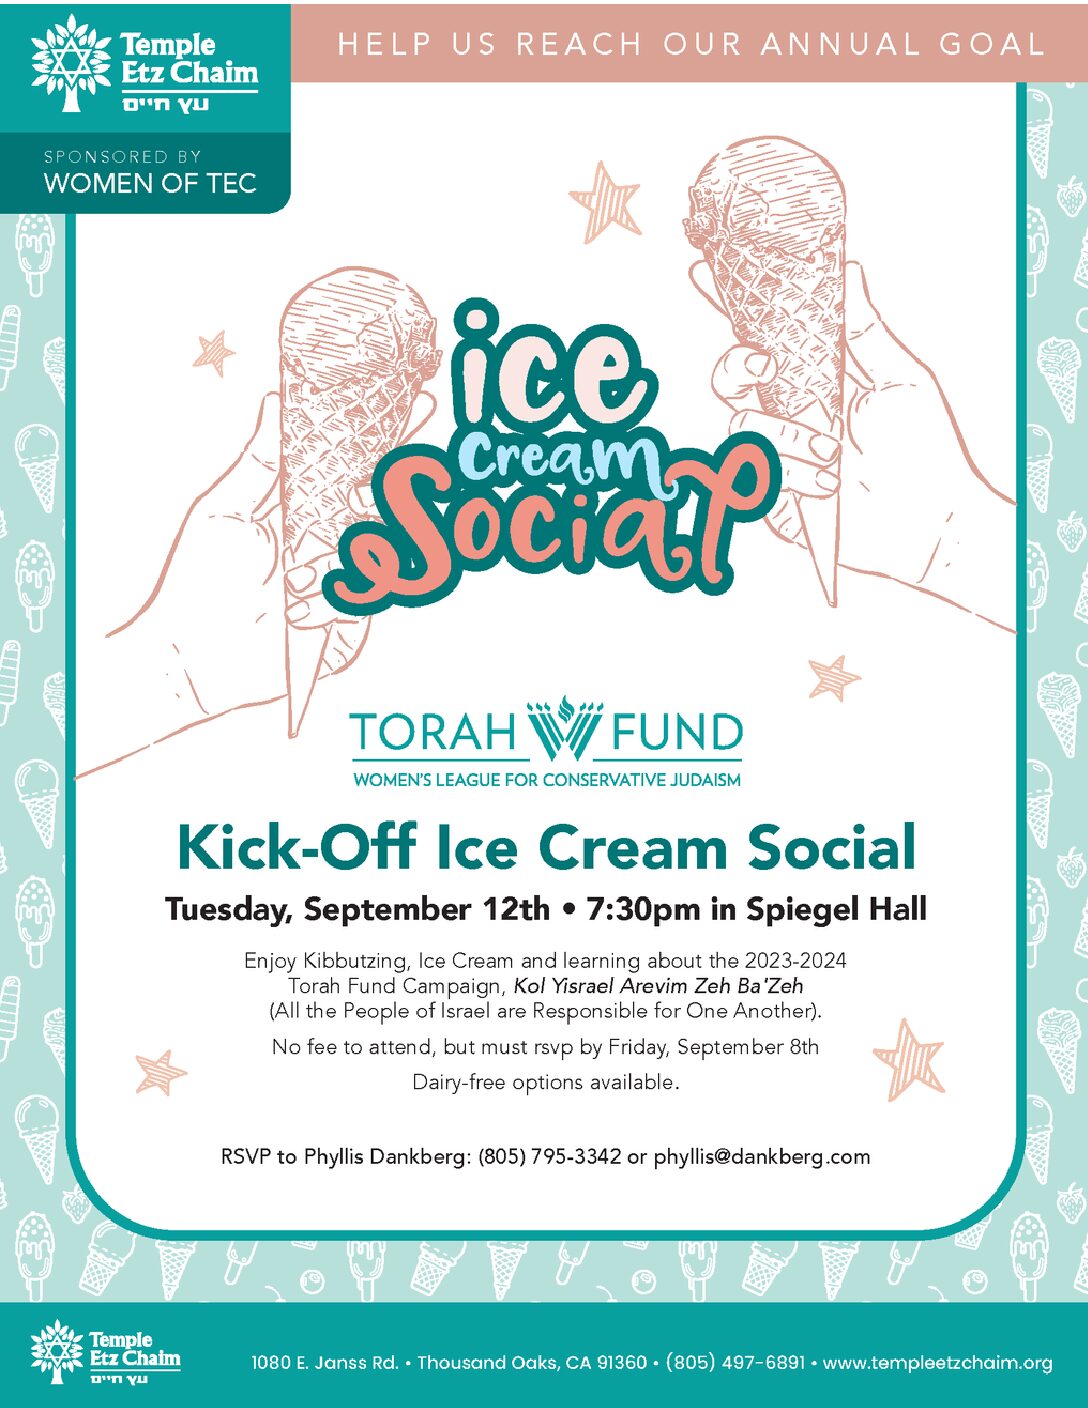 WOTEC Presents: Torah Fund Kick-off Ice Cream Social